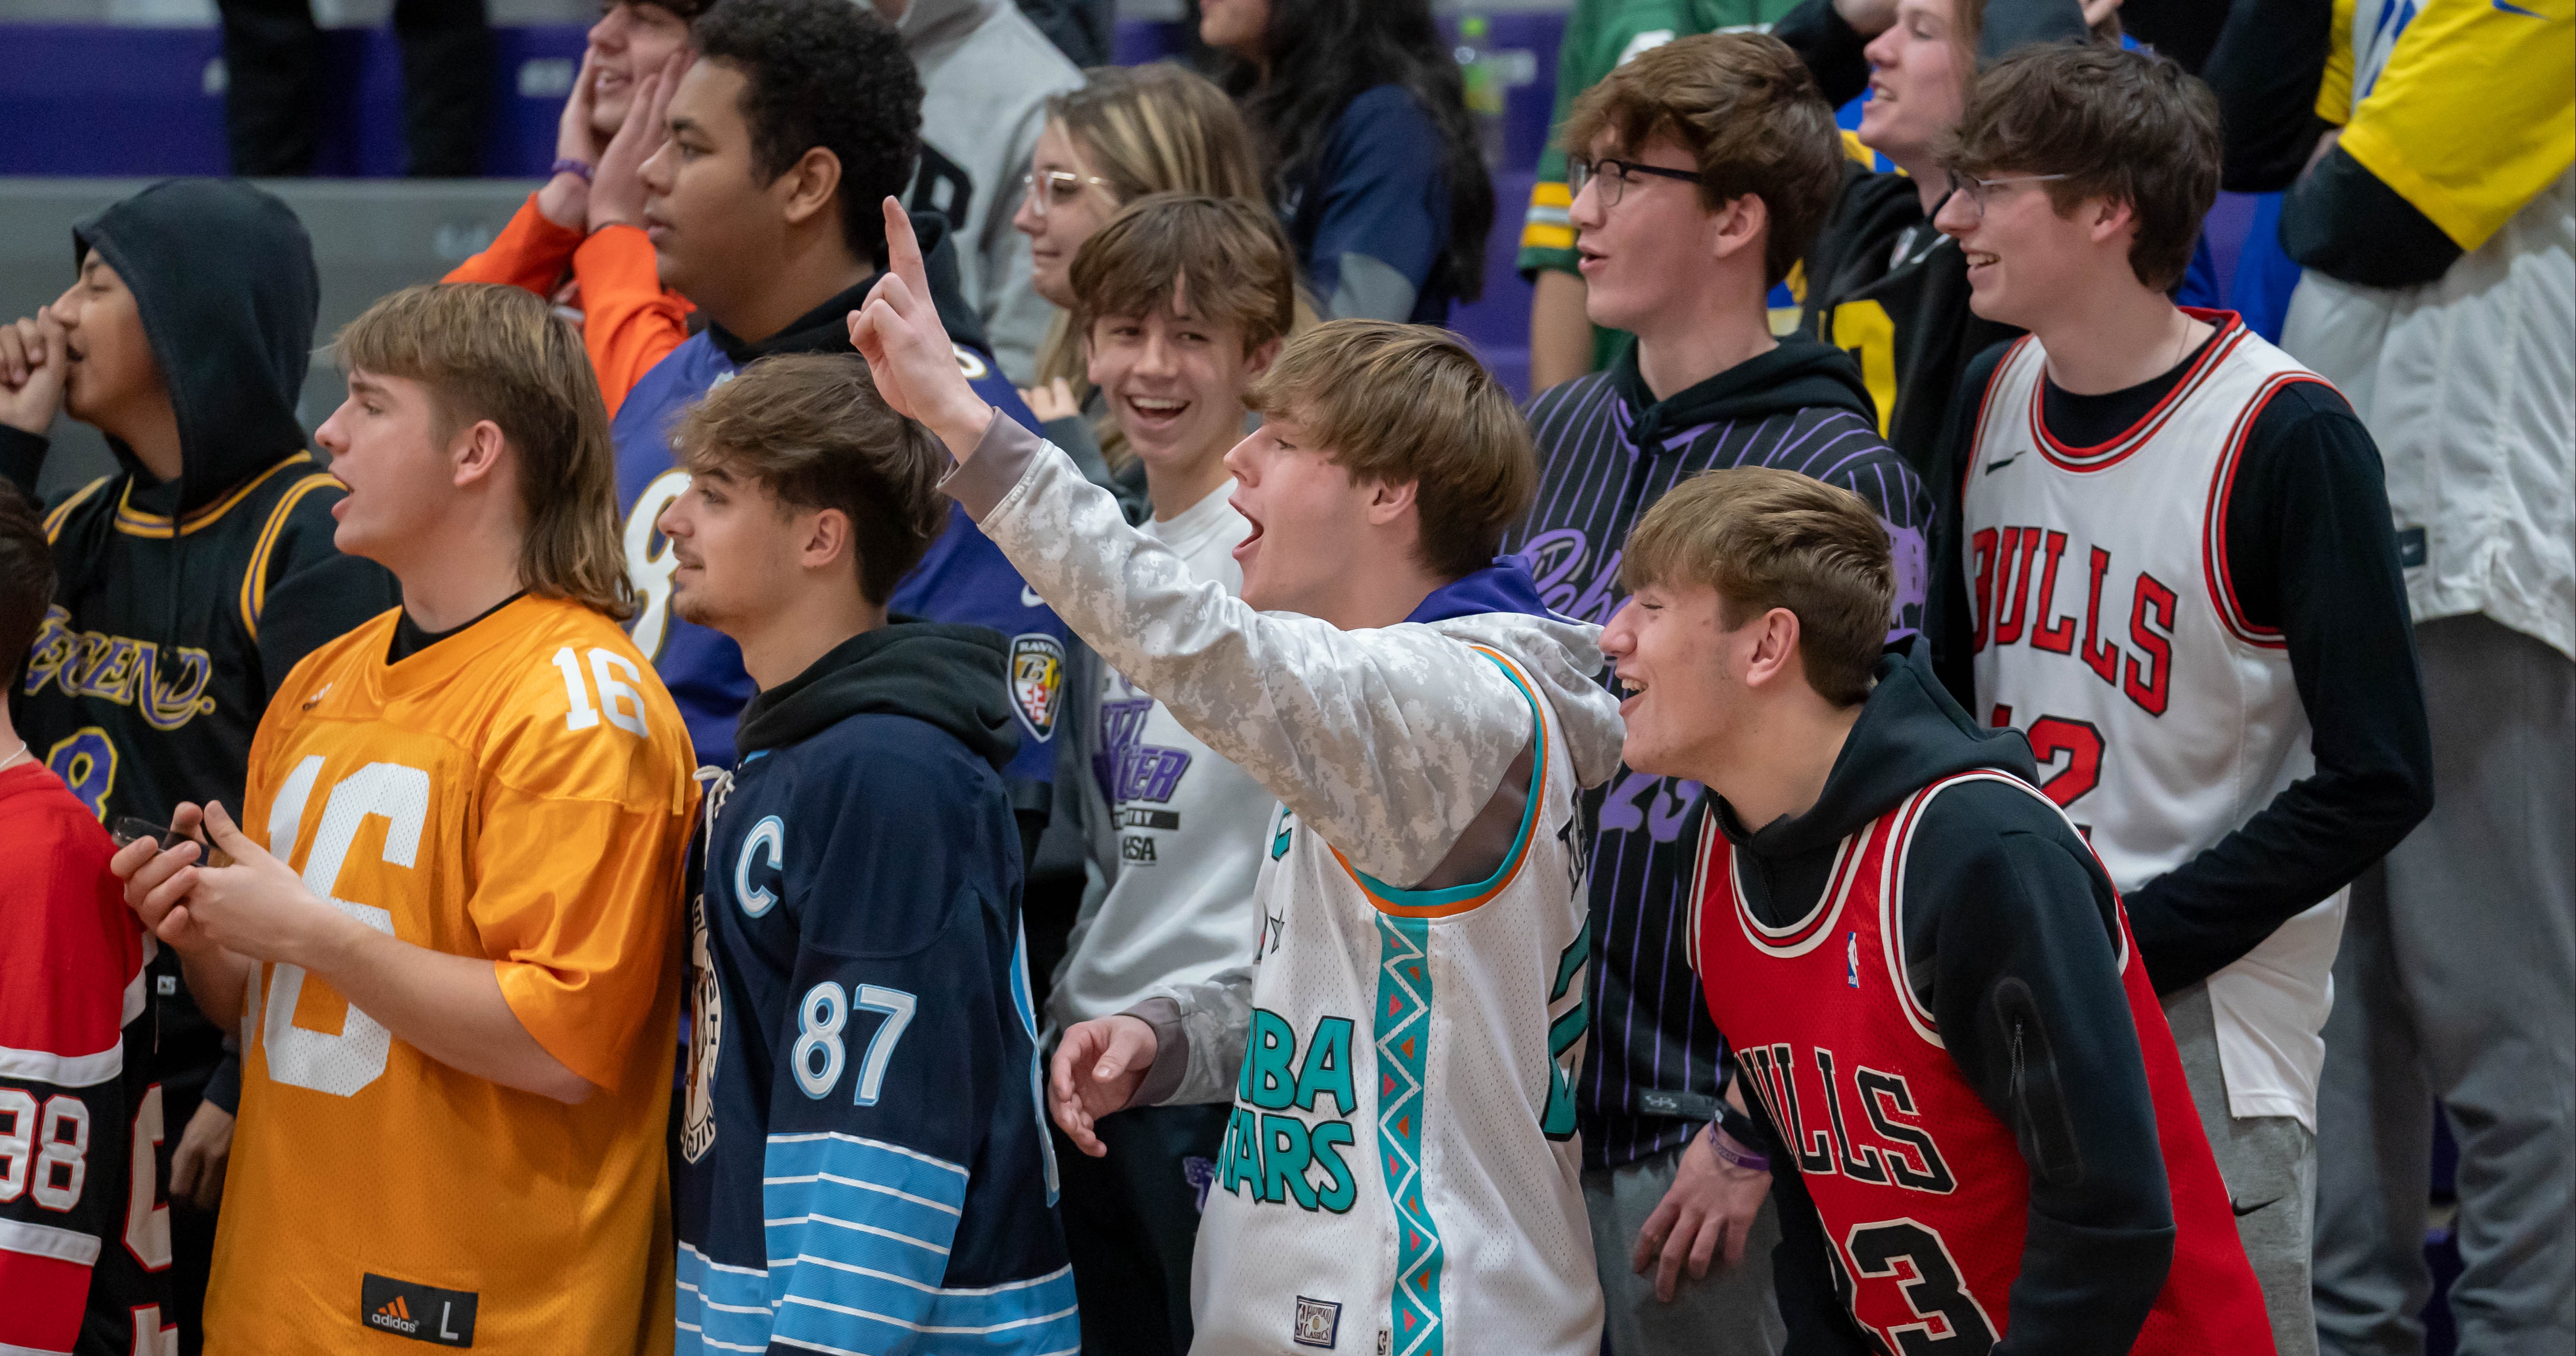 Students cheering on the boys varsity basketball team